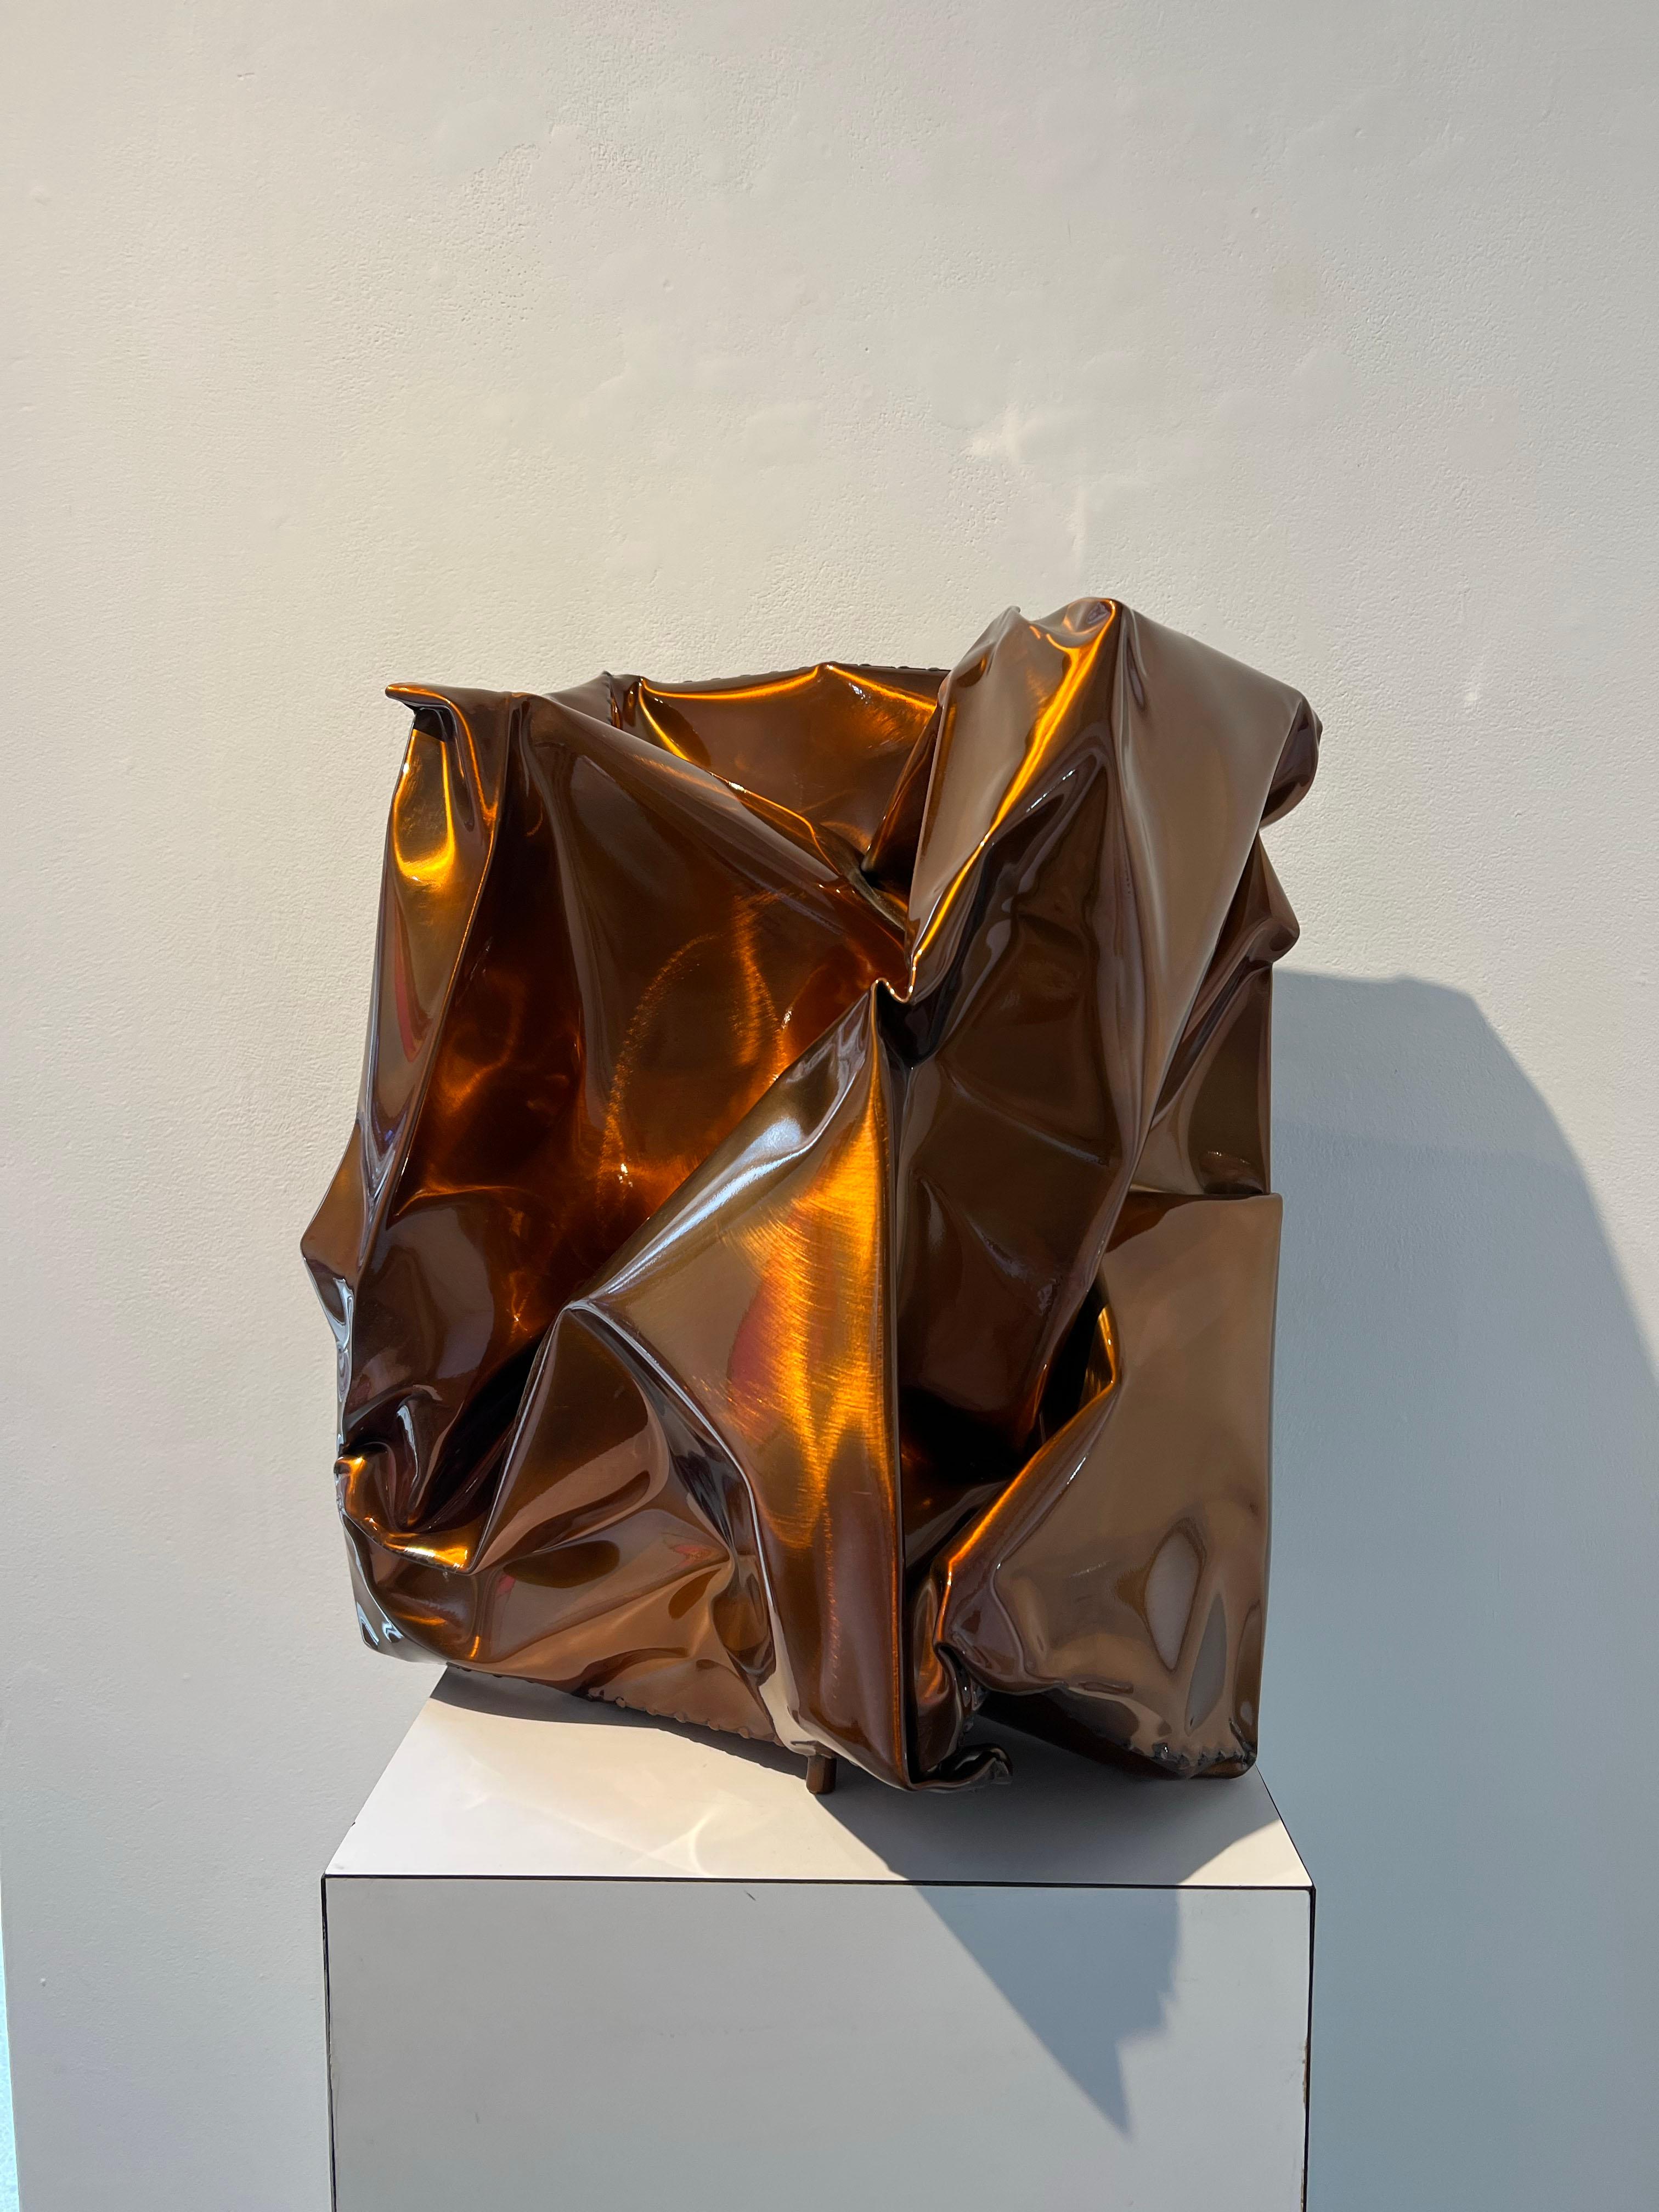 Chestnut - Sculpture by Rick Lazes